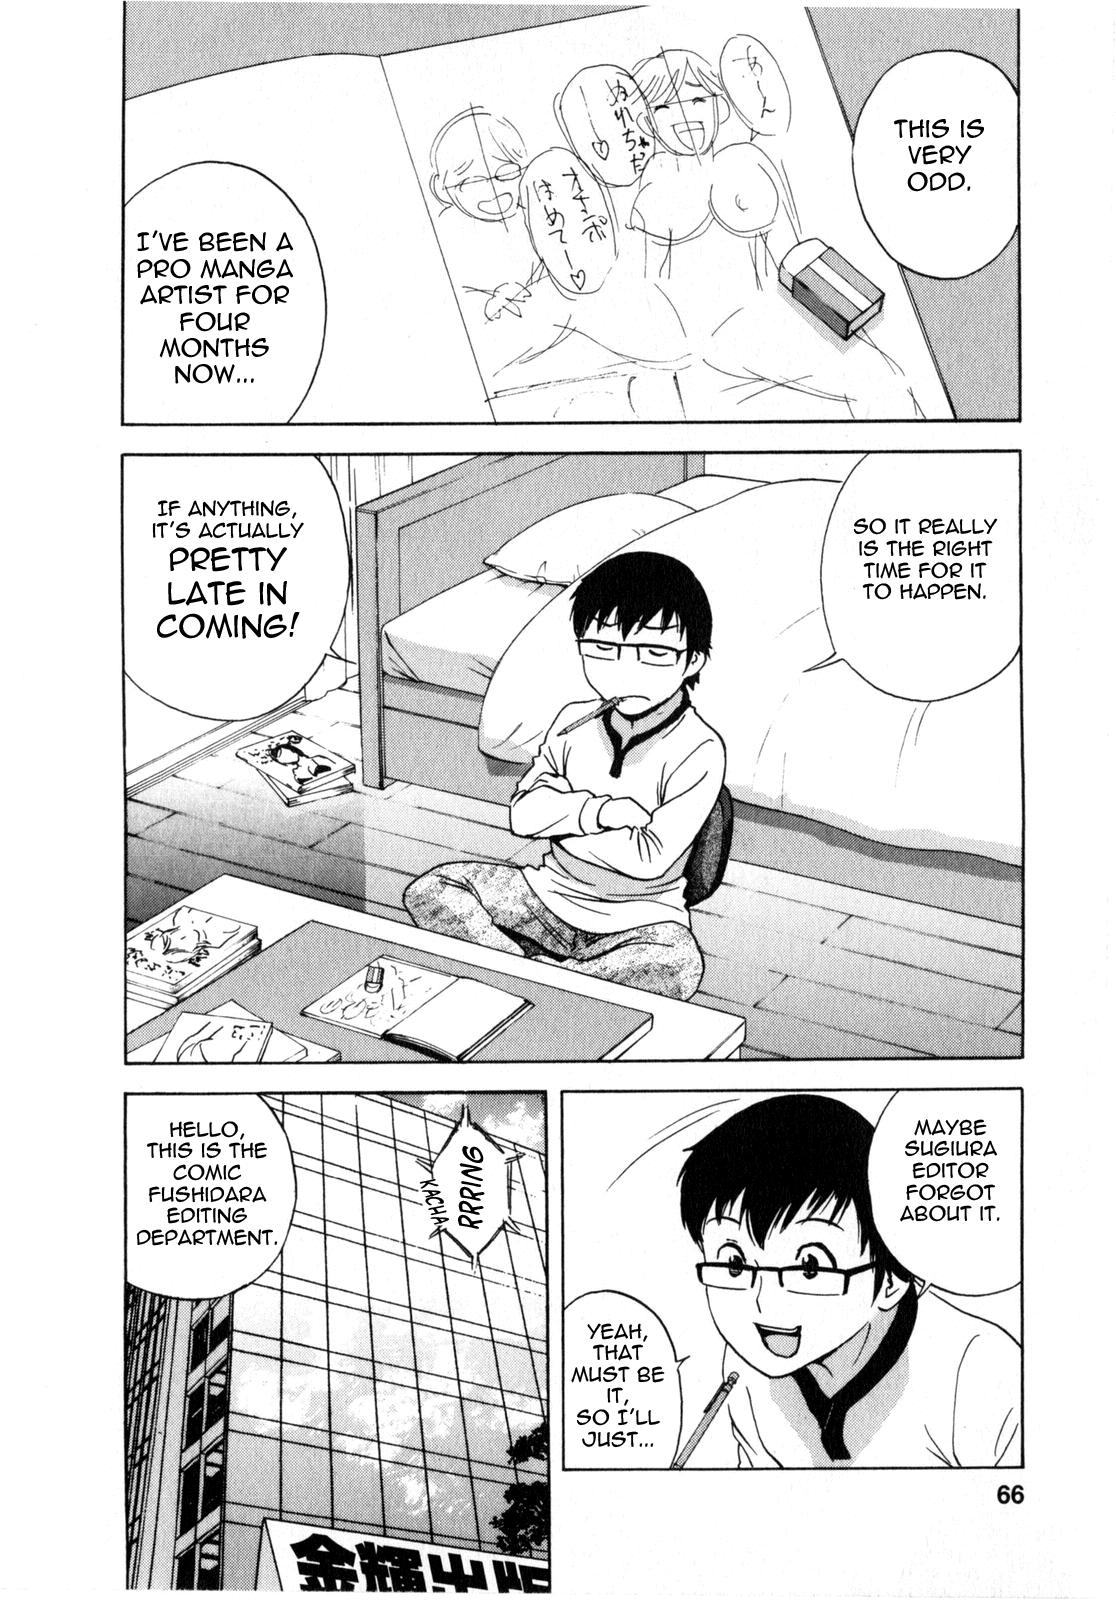 [Hidemaru] Life with Married Women Just Like a Manga 2 - Ch. 1-7 [English] {Tadanohito} 69